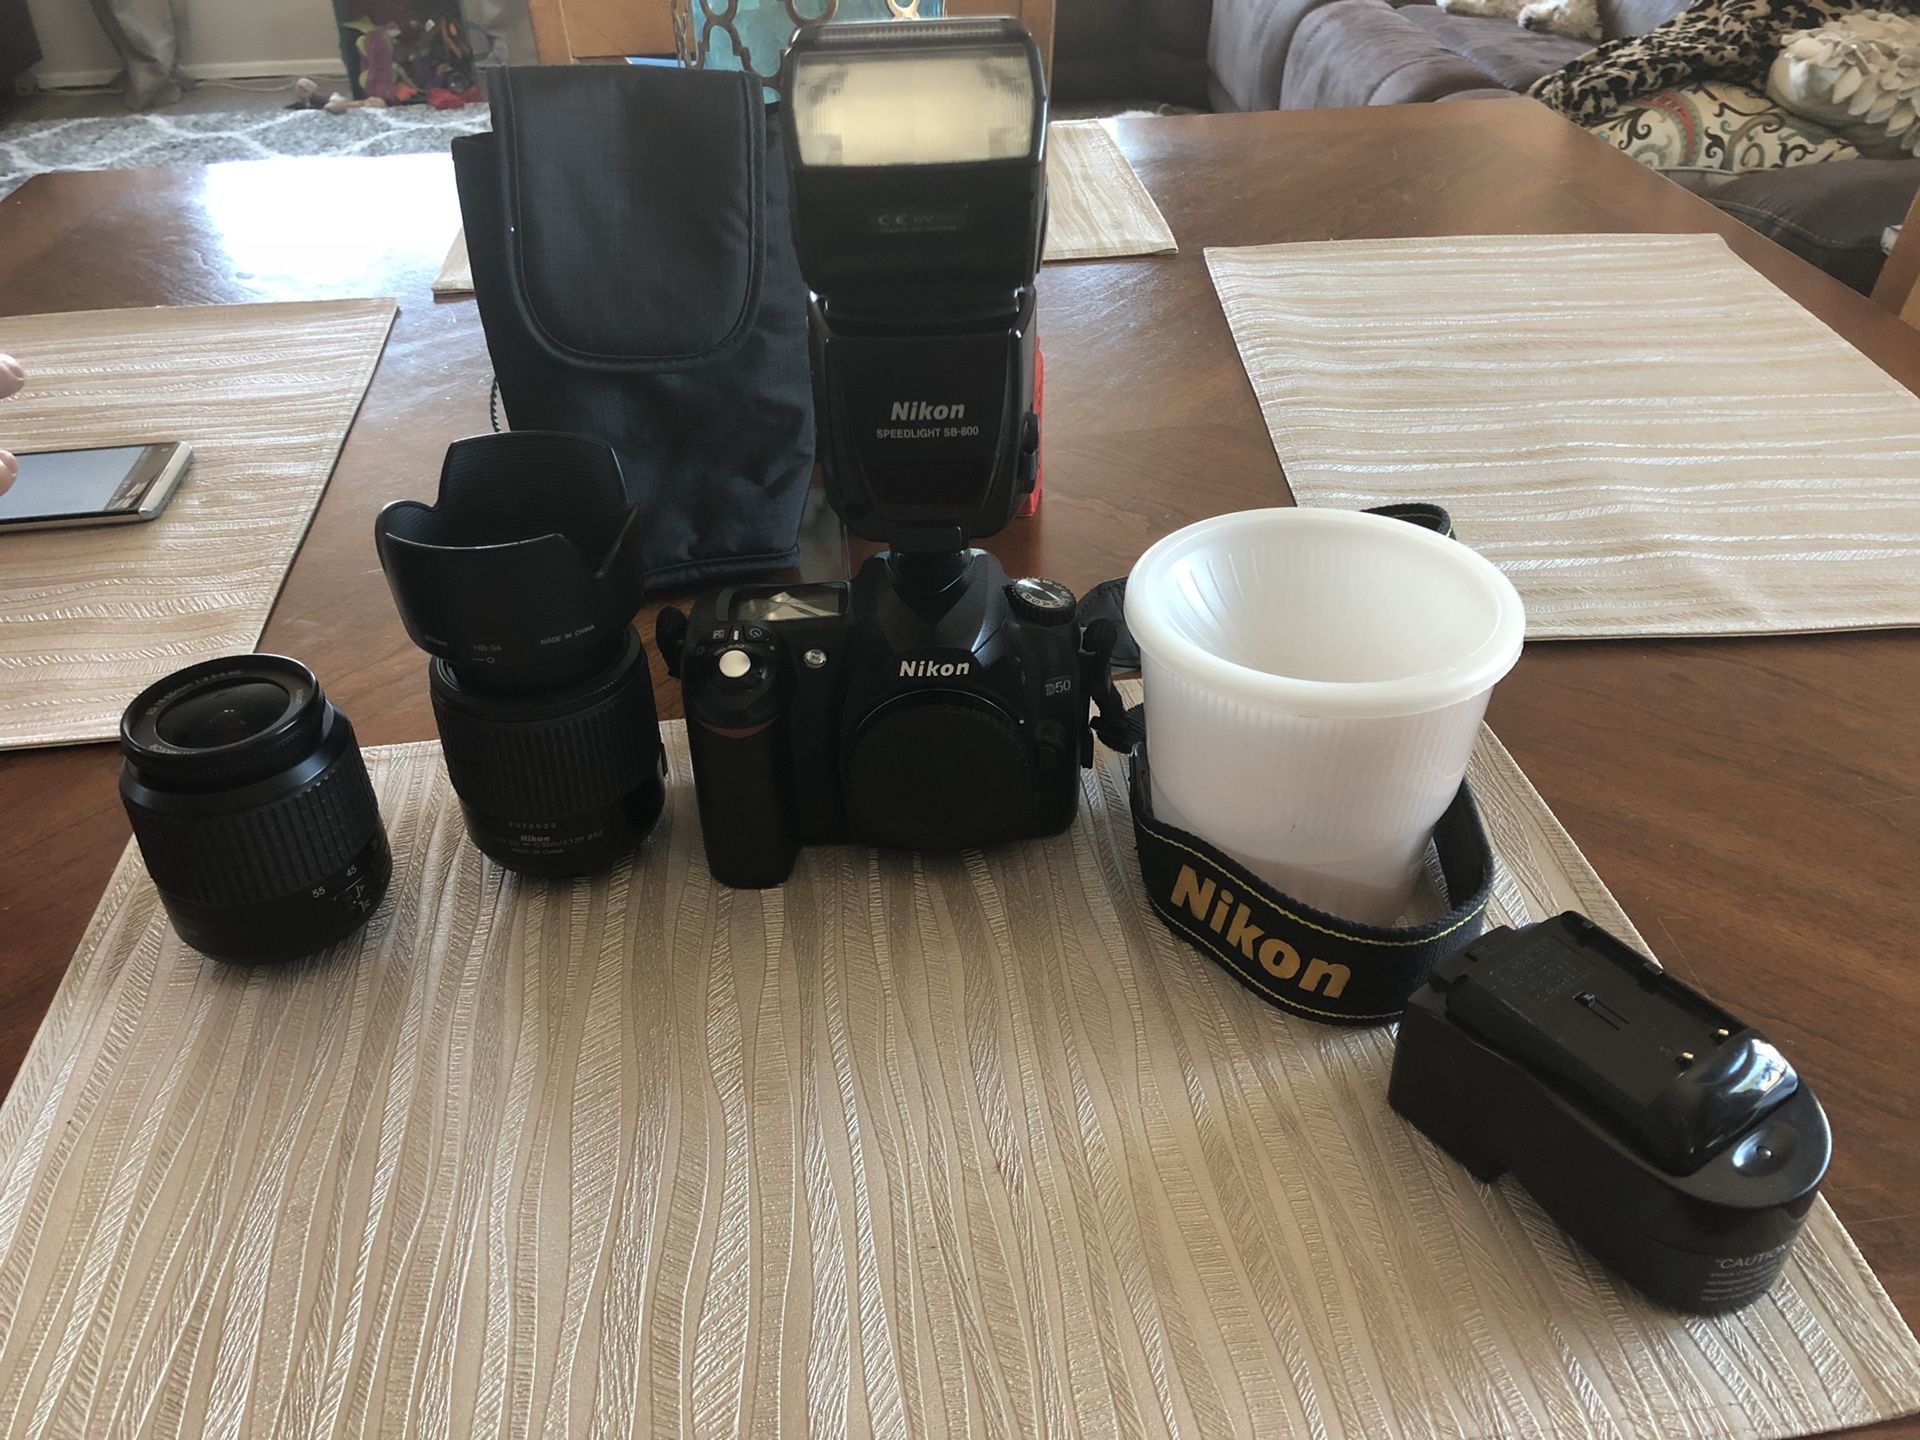 Nikon Camera w/ 2 lenses and flash